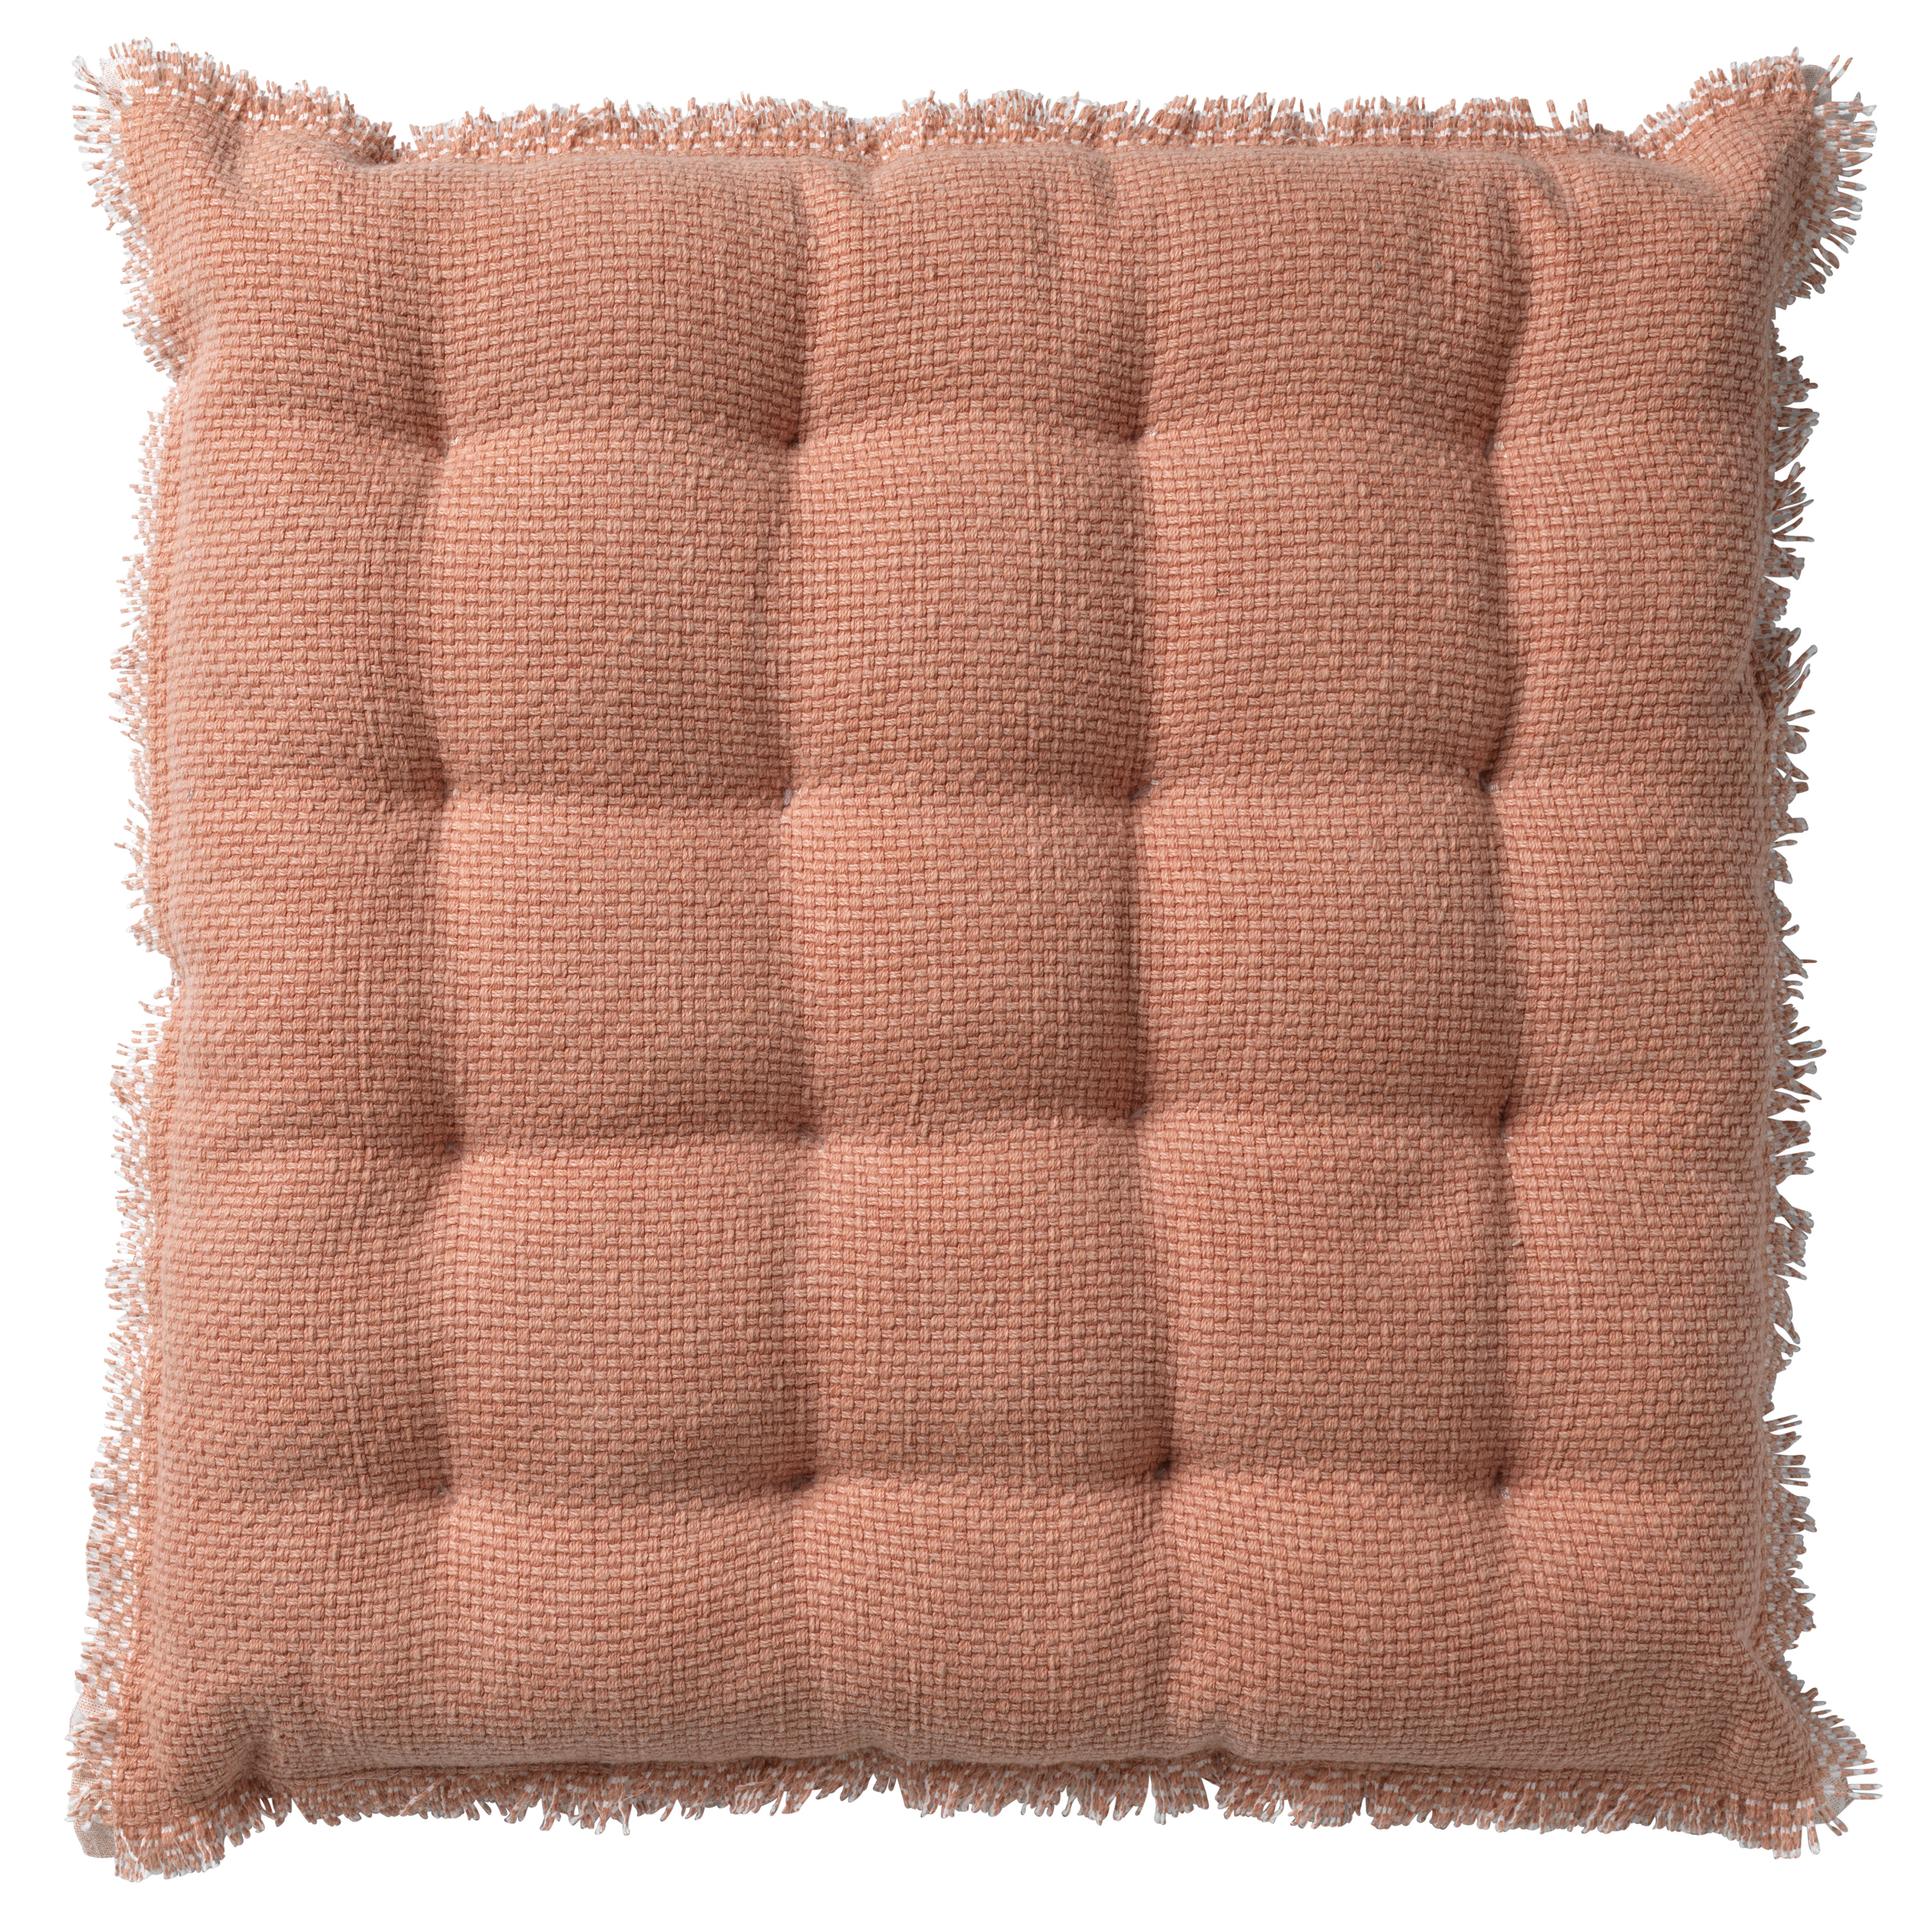 BURTO - Seat pad cushion washed coton Muted Clay 40x40 cm